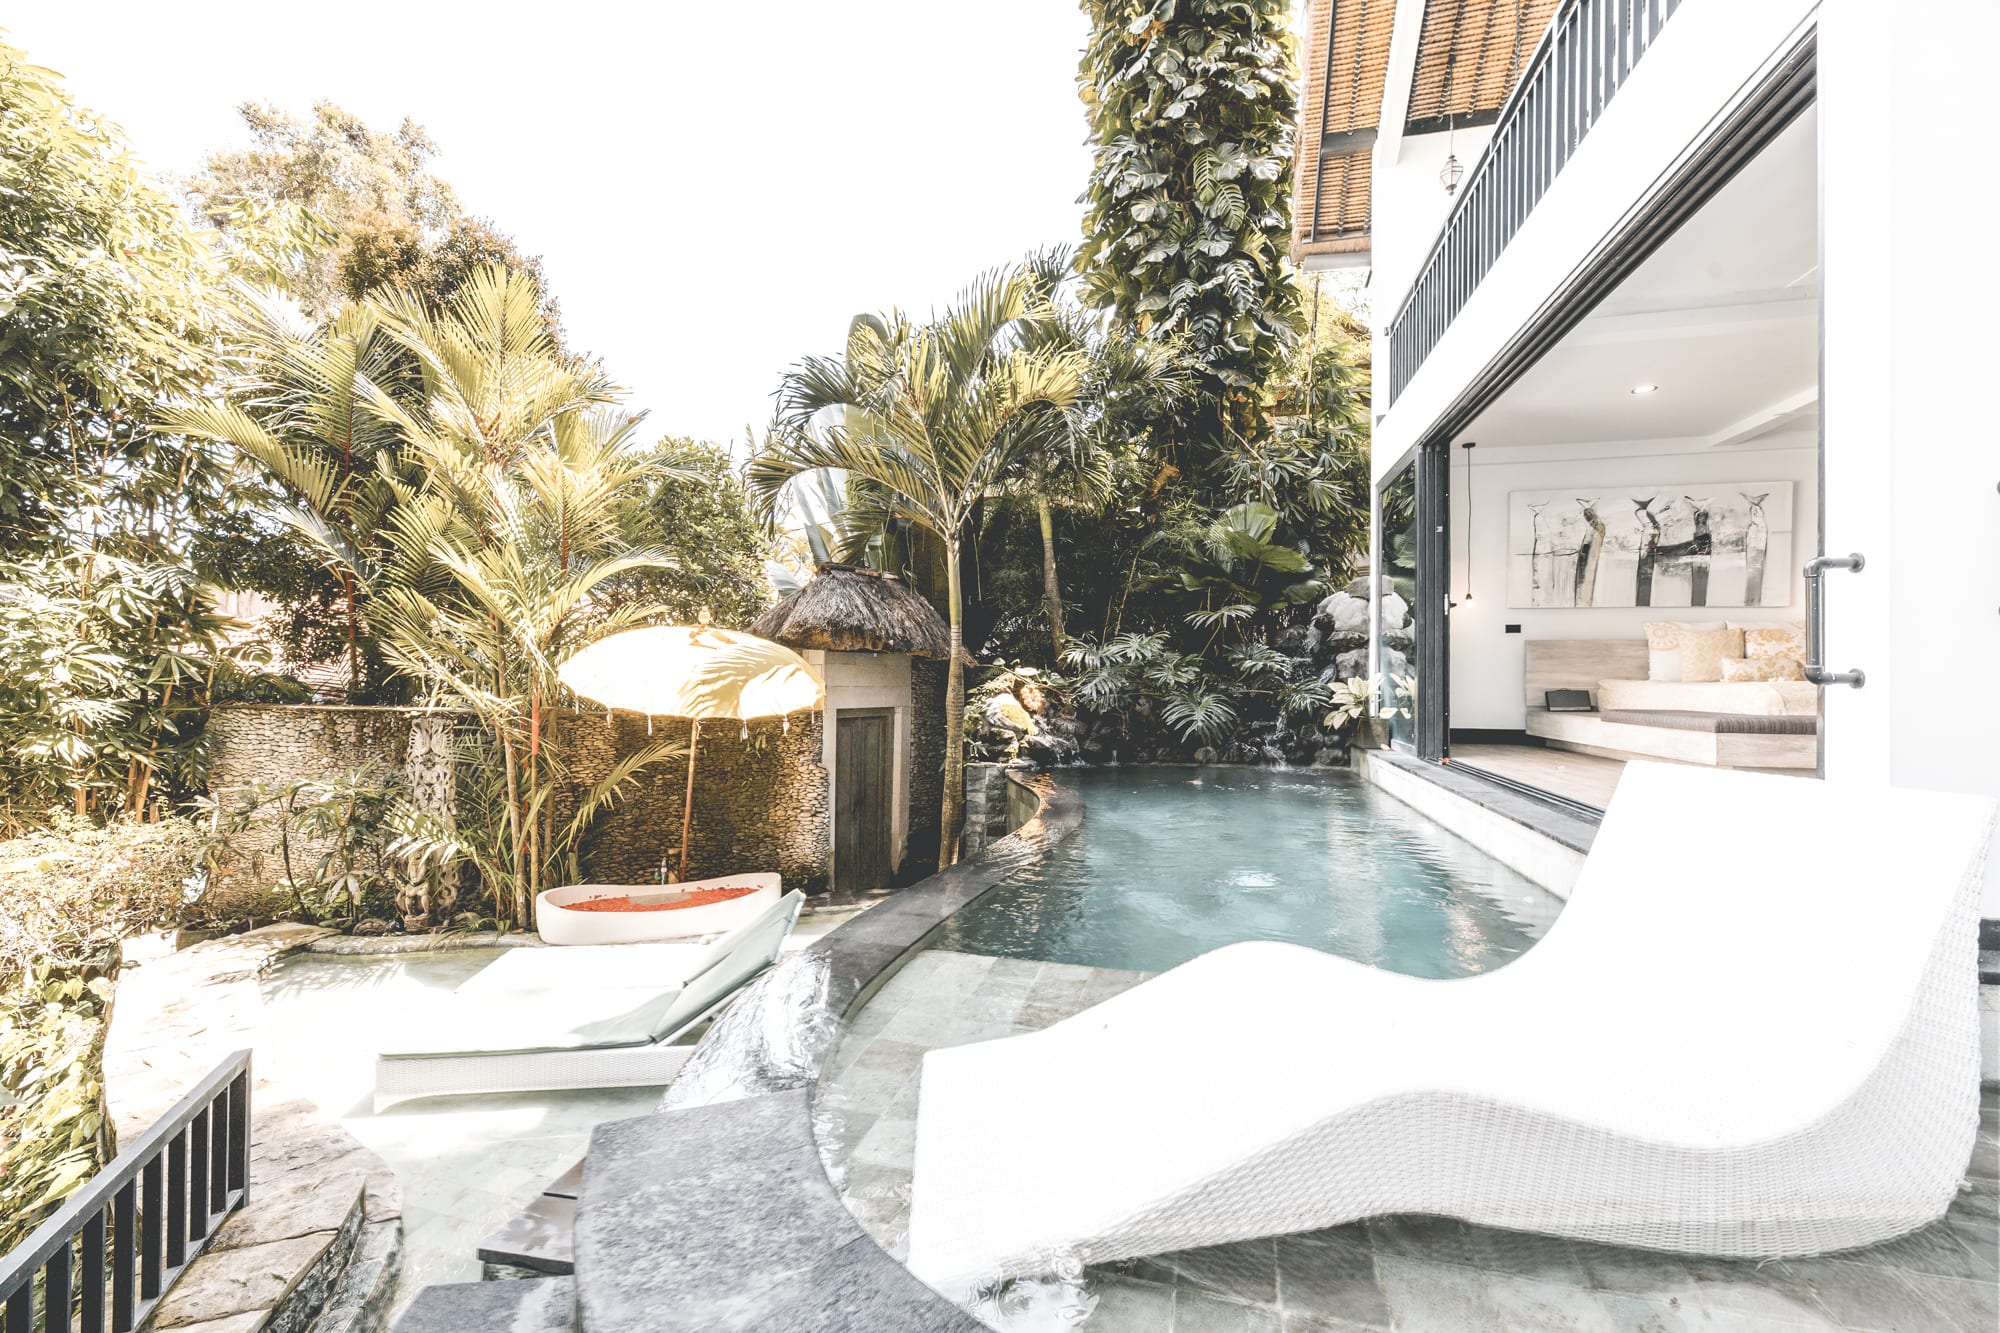 boomhut op Bali, Airbnb finds: slapen in een boomhut op Bali